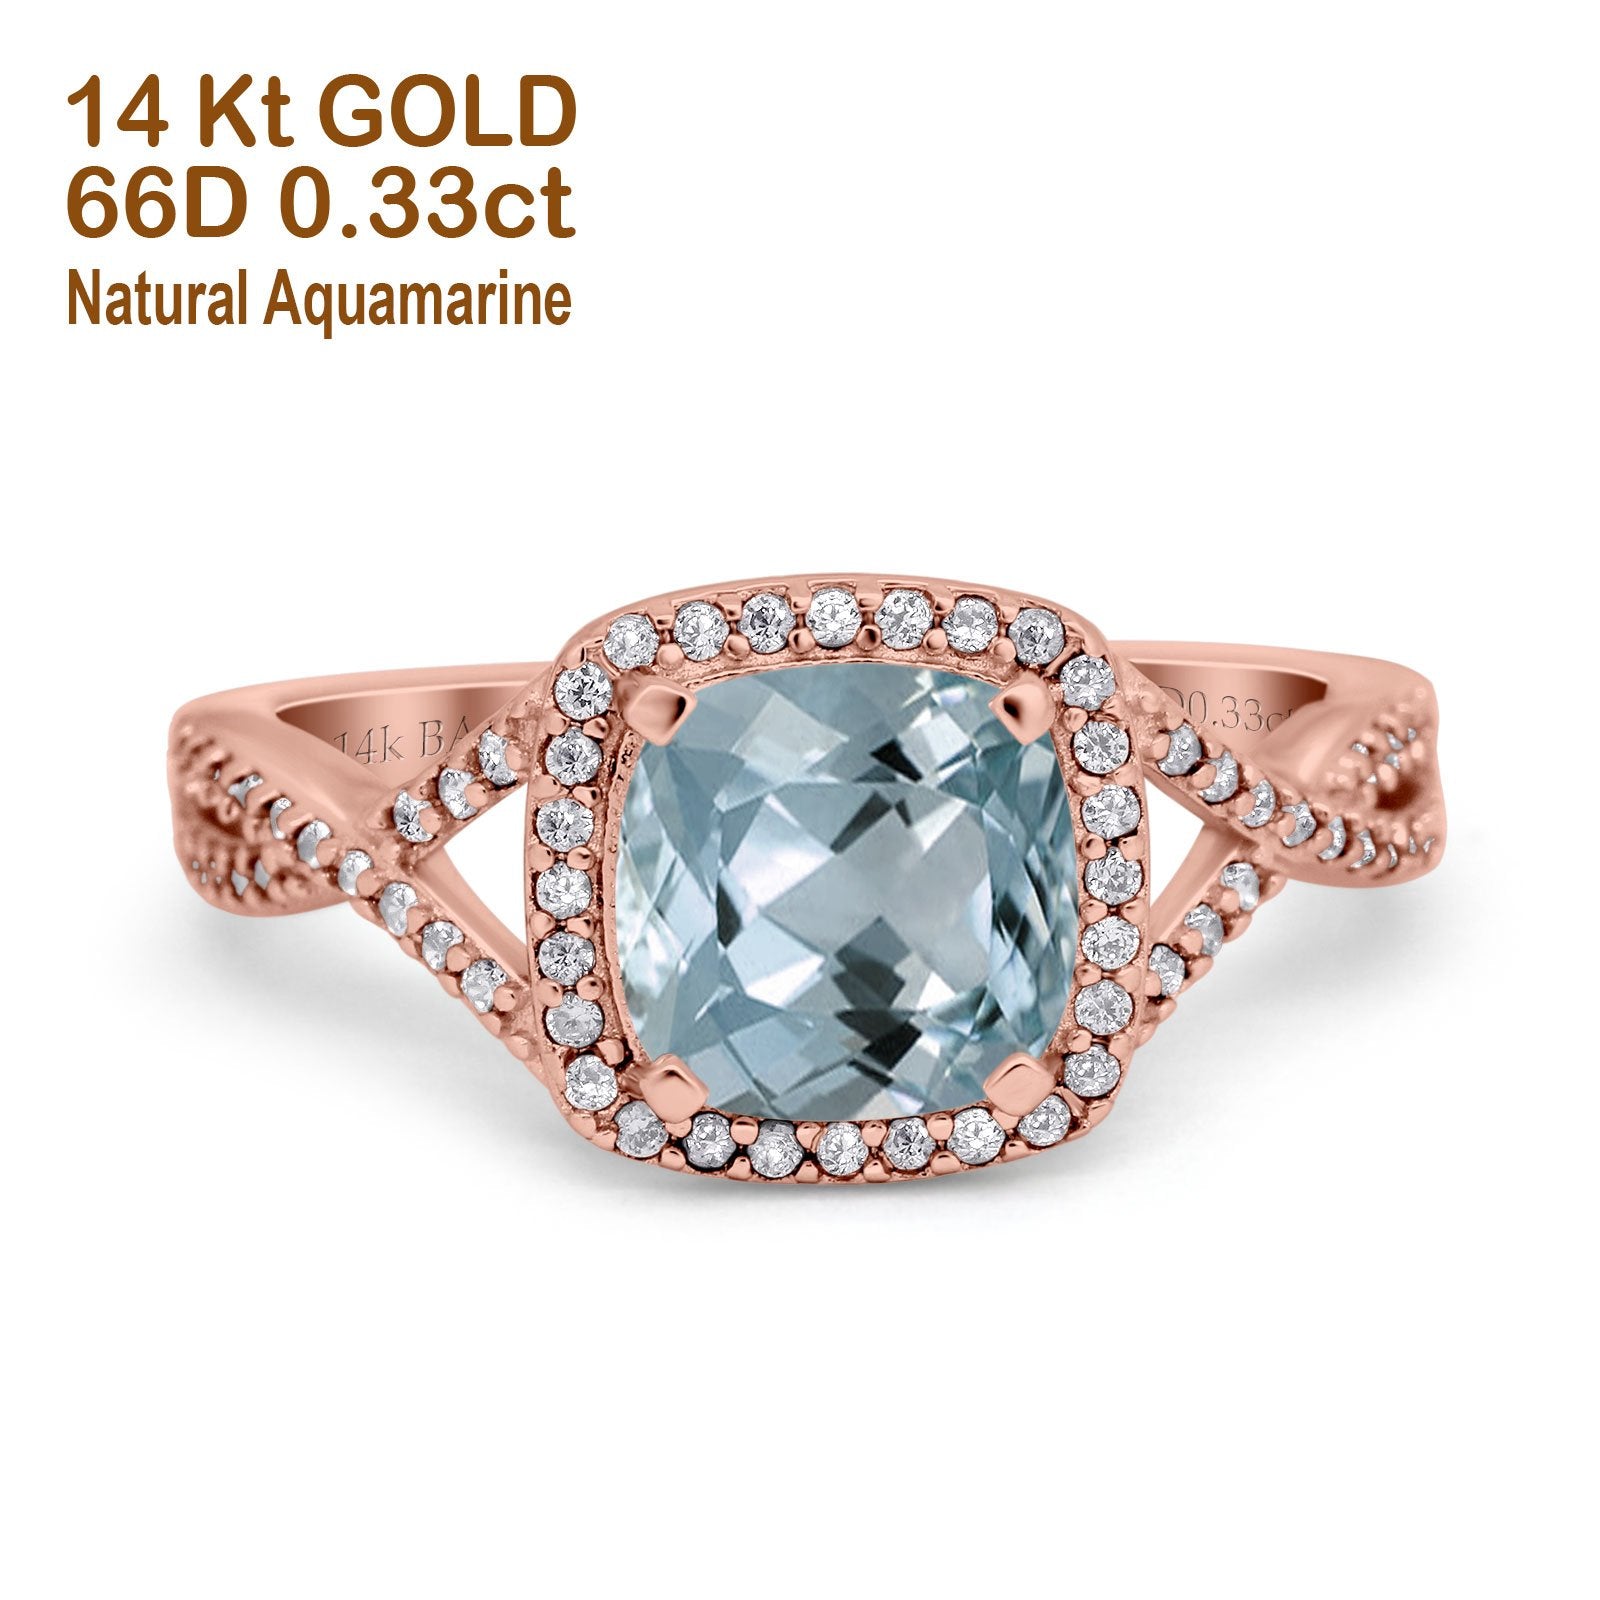 14K Gold 2.37ct Cushion Infinity Shank 8mm G SI Diamond Engagement Wedding Ring